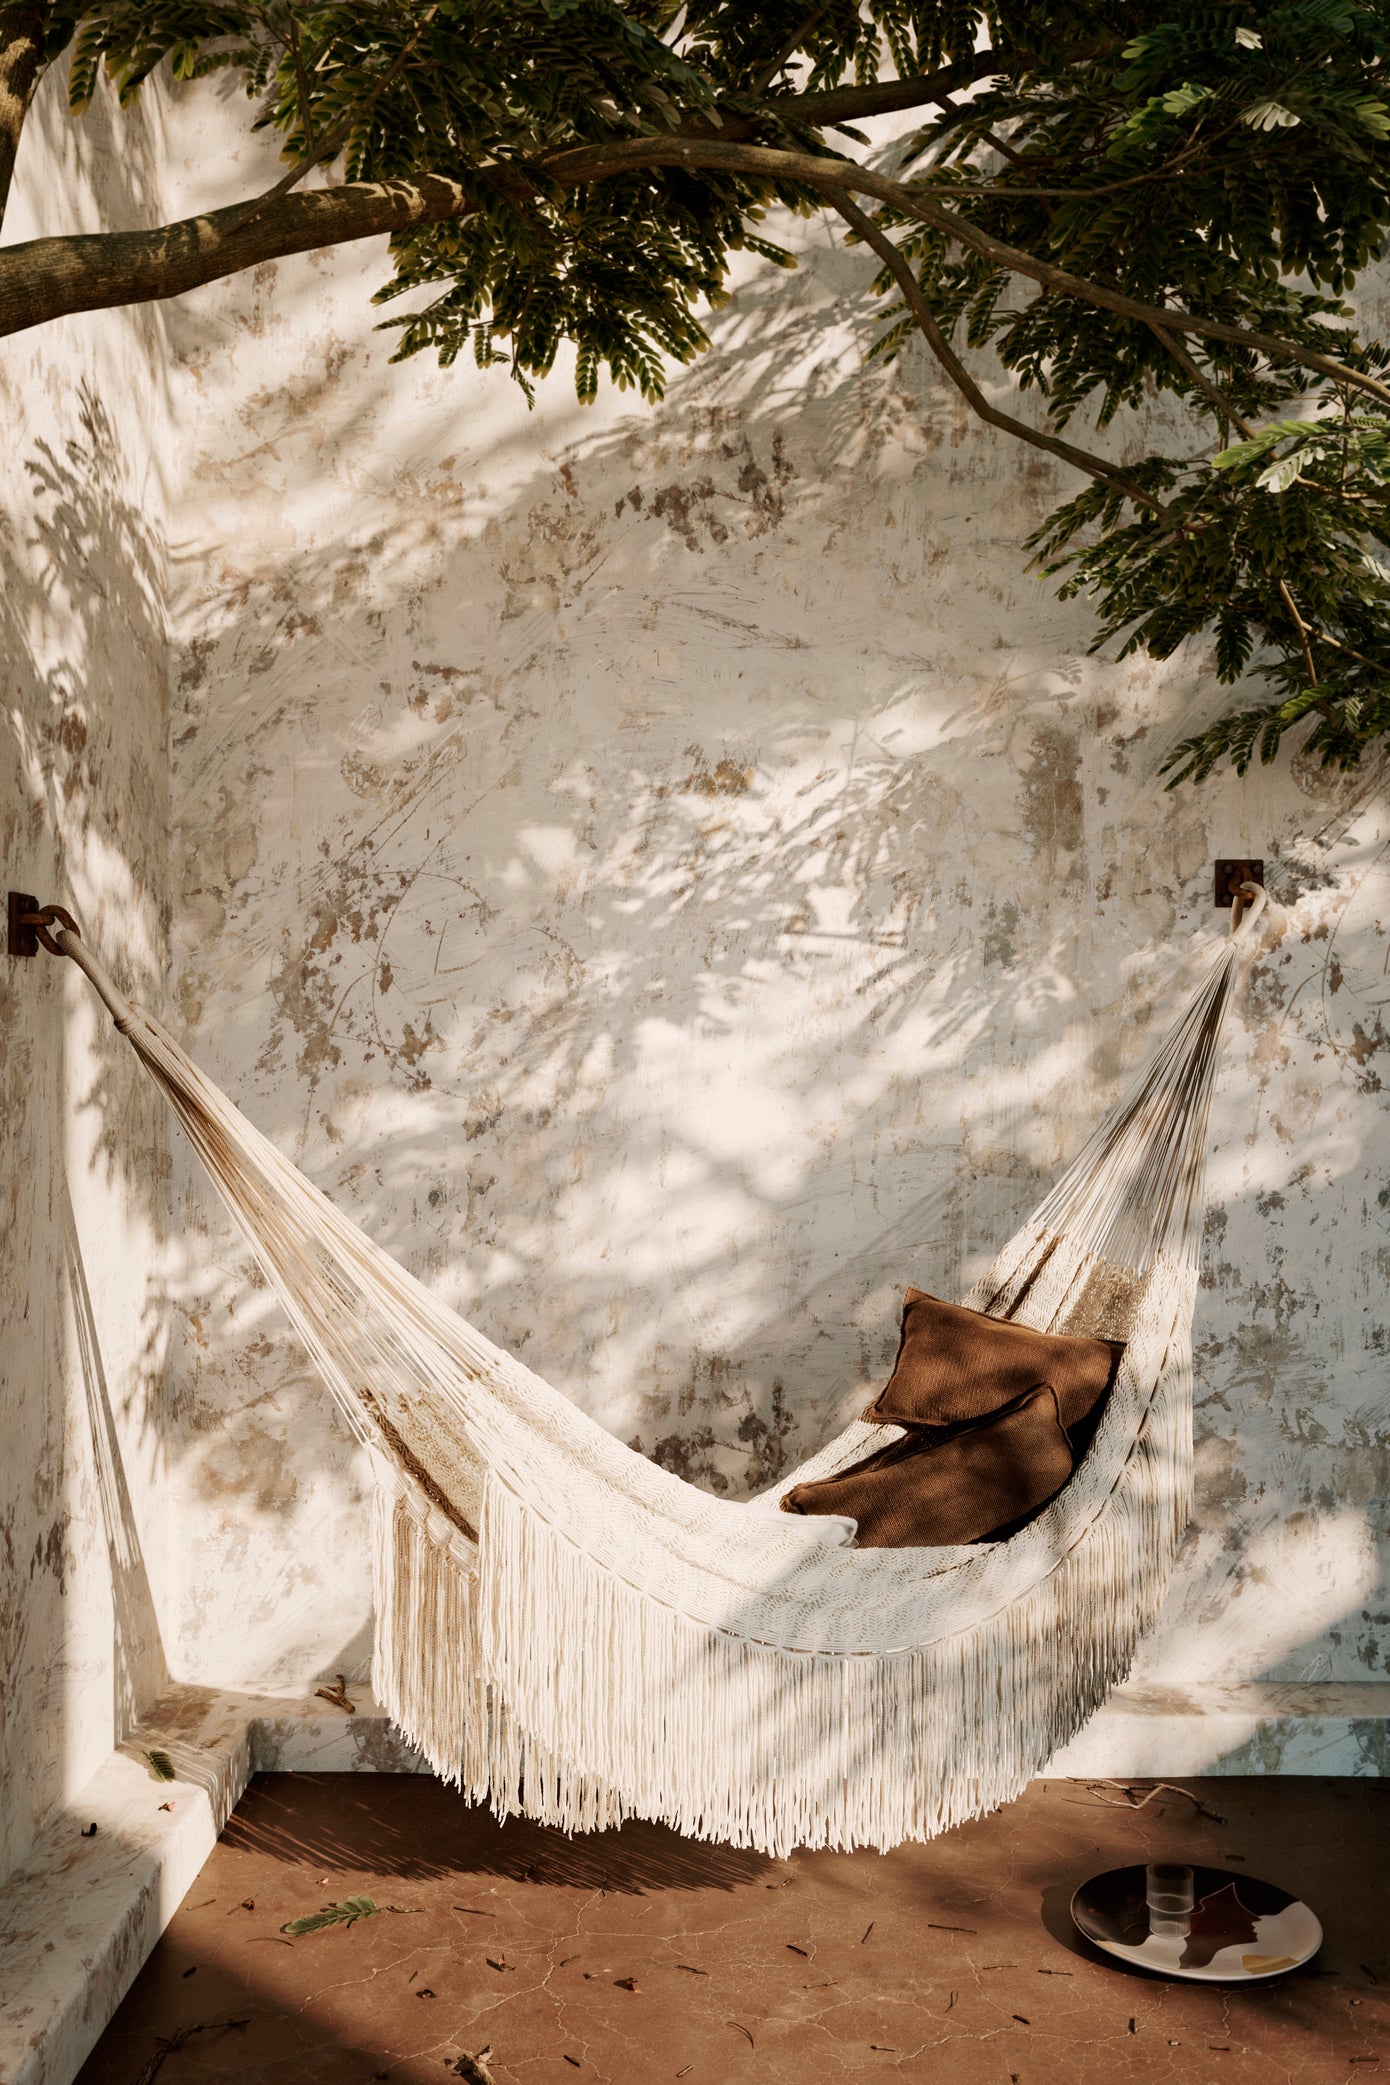 Desert Rectangle Cushion | Sand | Recycled PET-yarn | by ferm Living - Lifestory - ferm LIVING